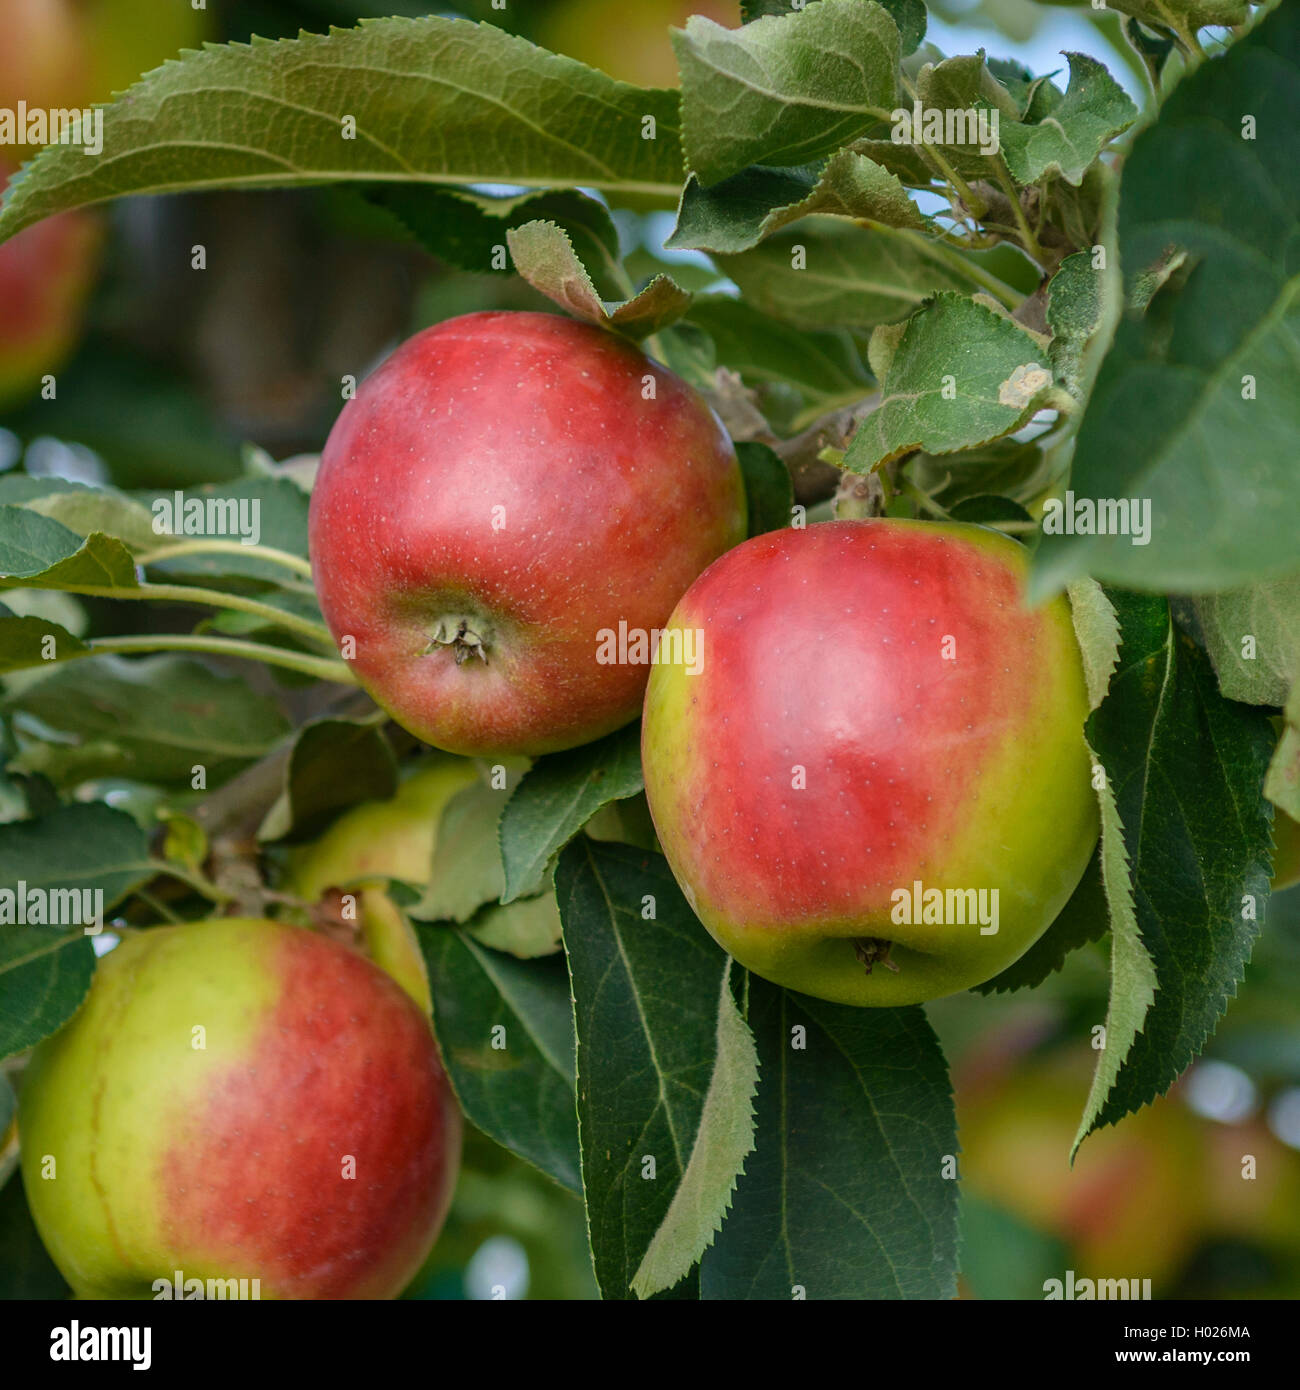 apple (Malus domestica 'Suncats', Malus domestica Suncats), cultivar Suncats Stock Photo